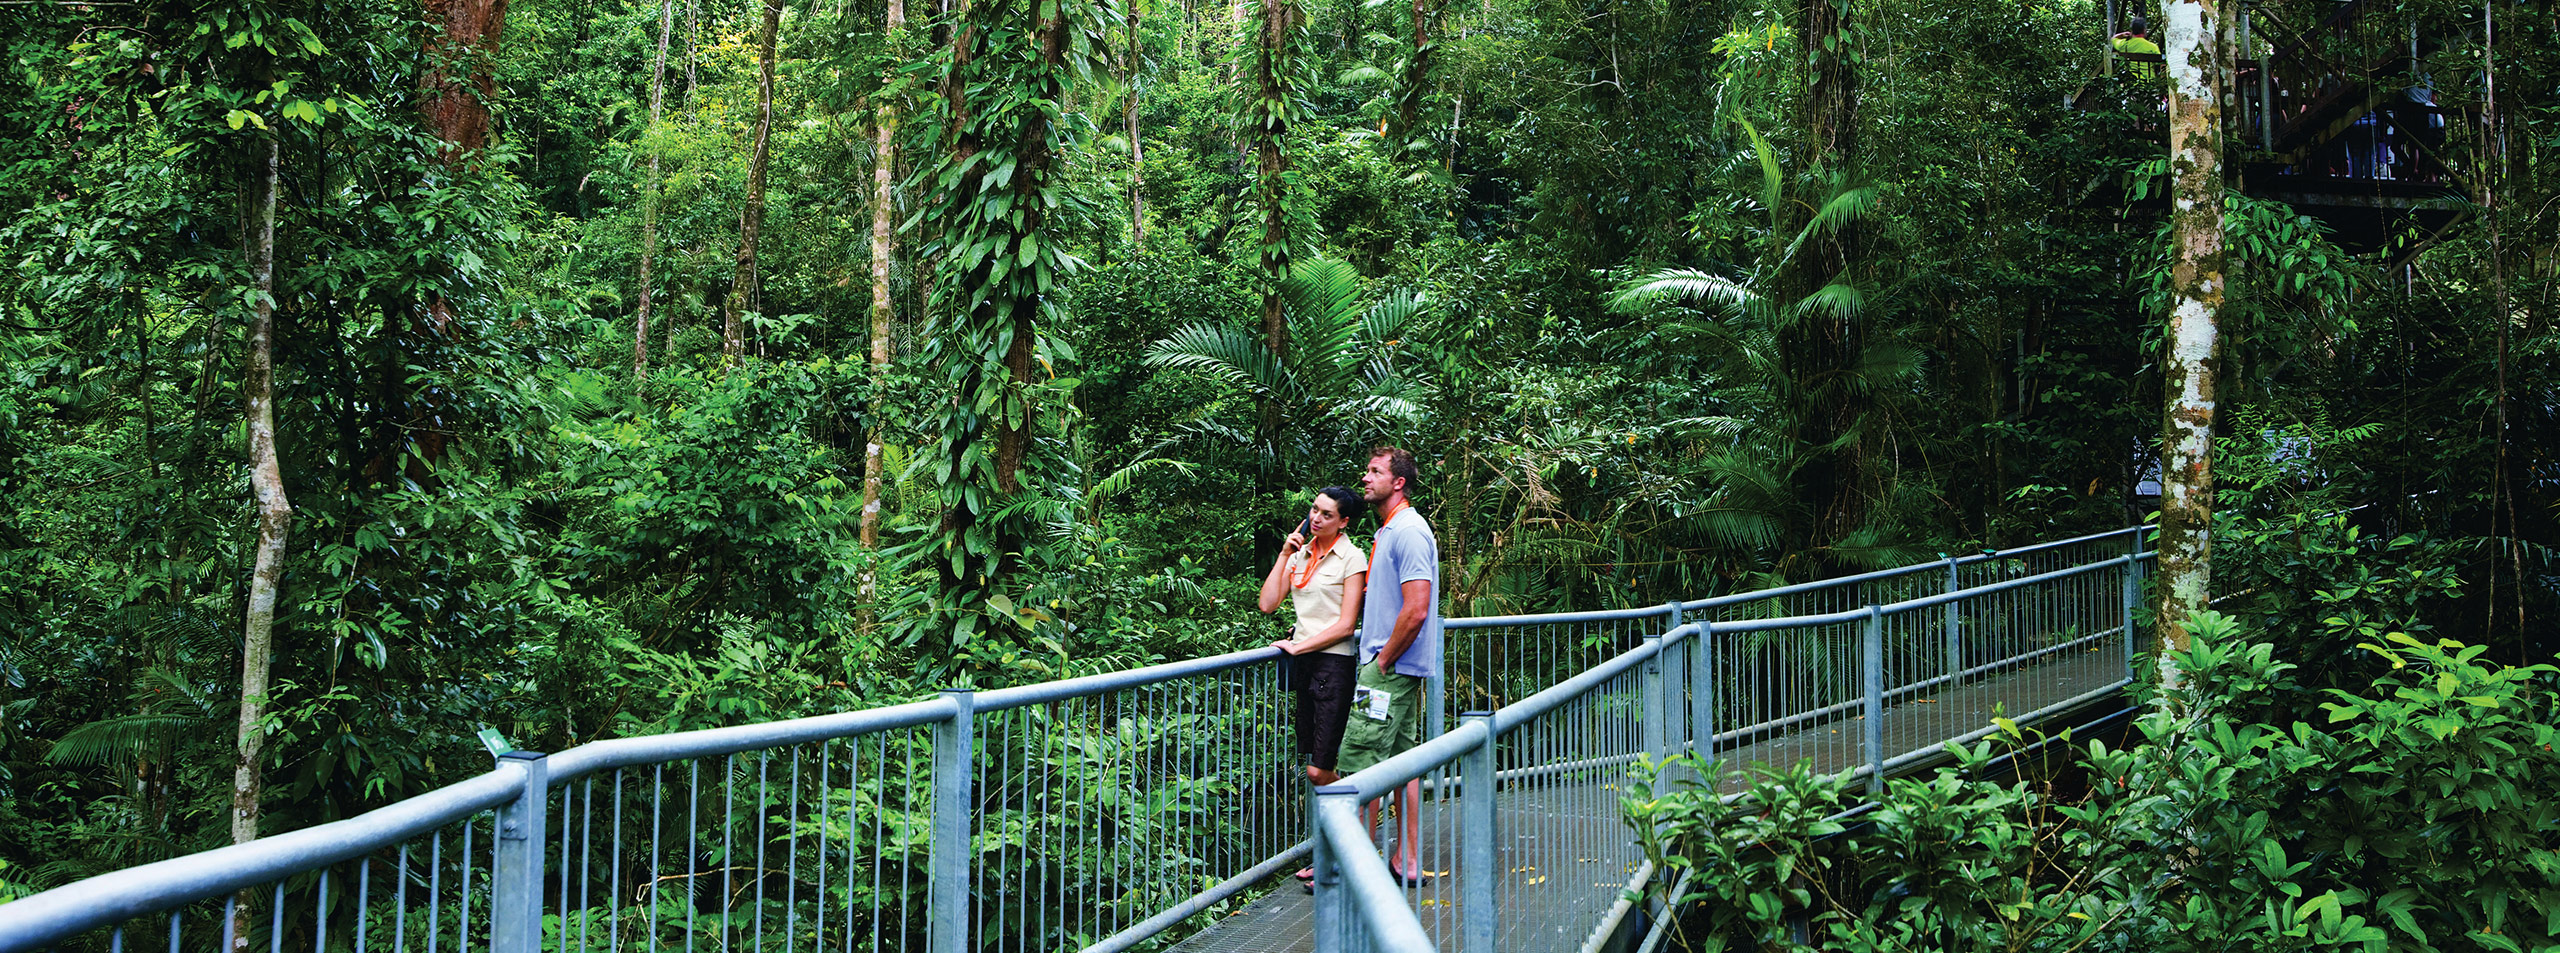 Daintree Rainforest walks